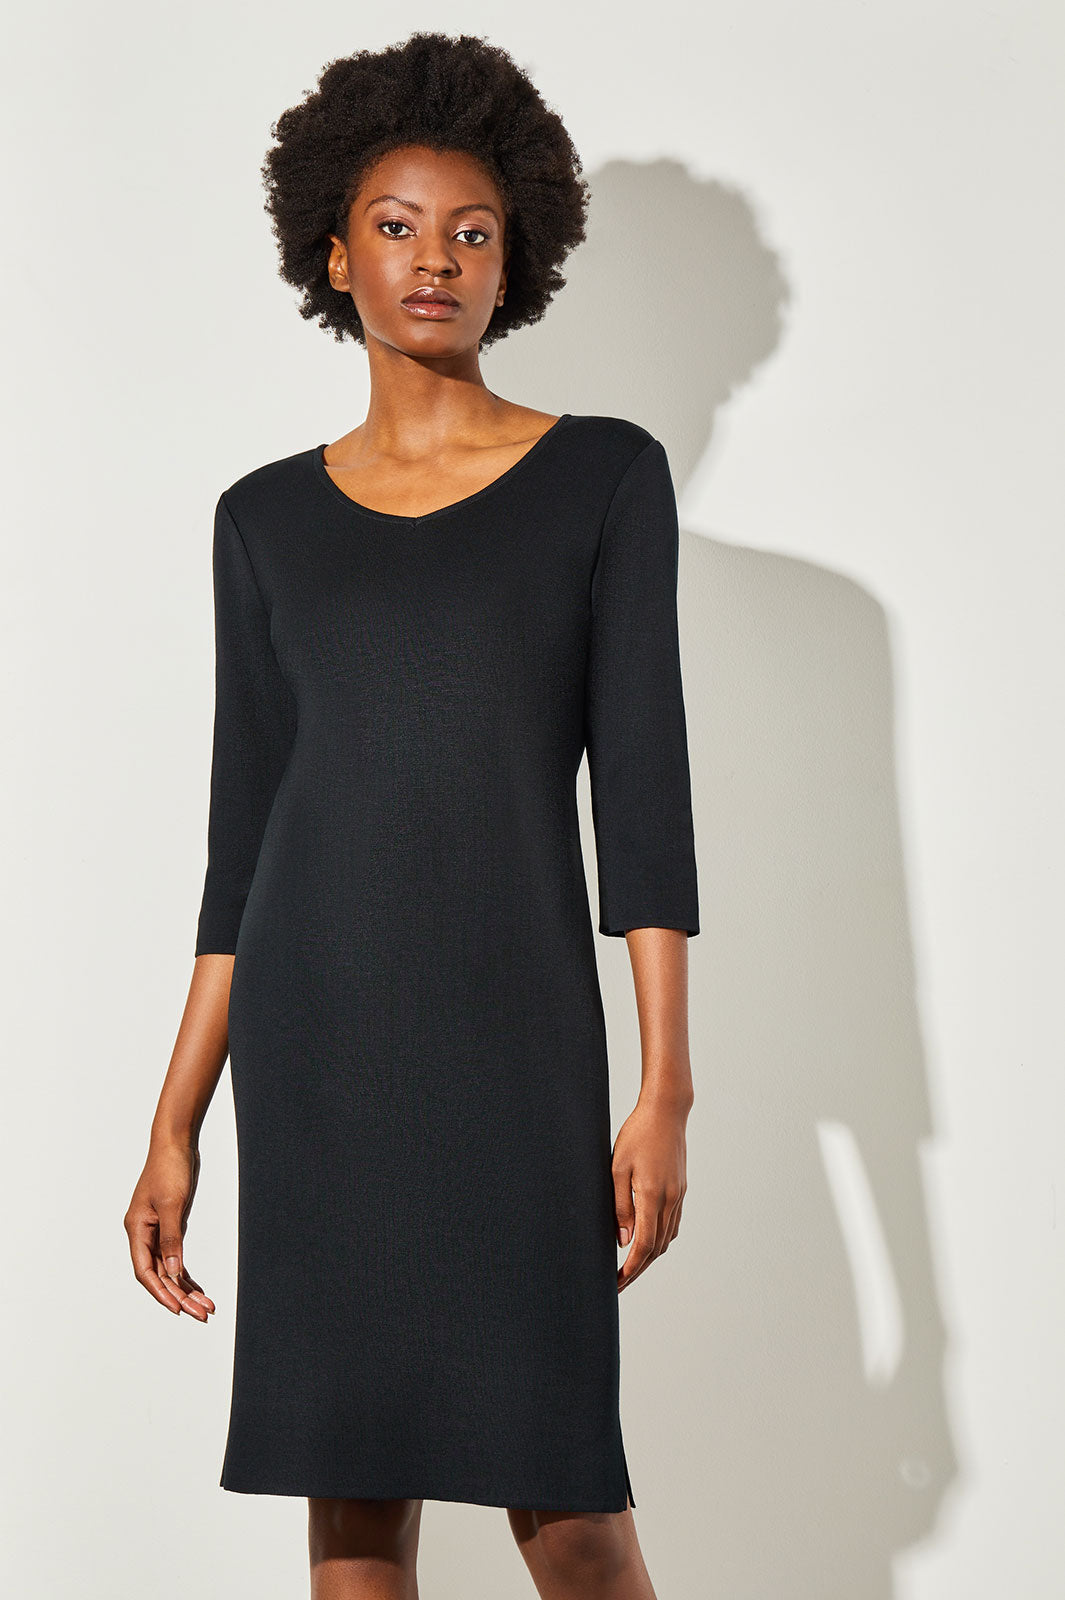 black 3 4 sleeve dress